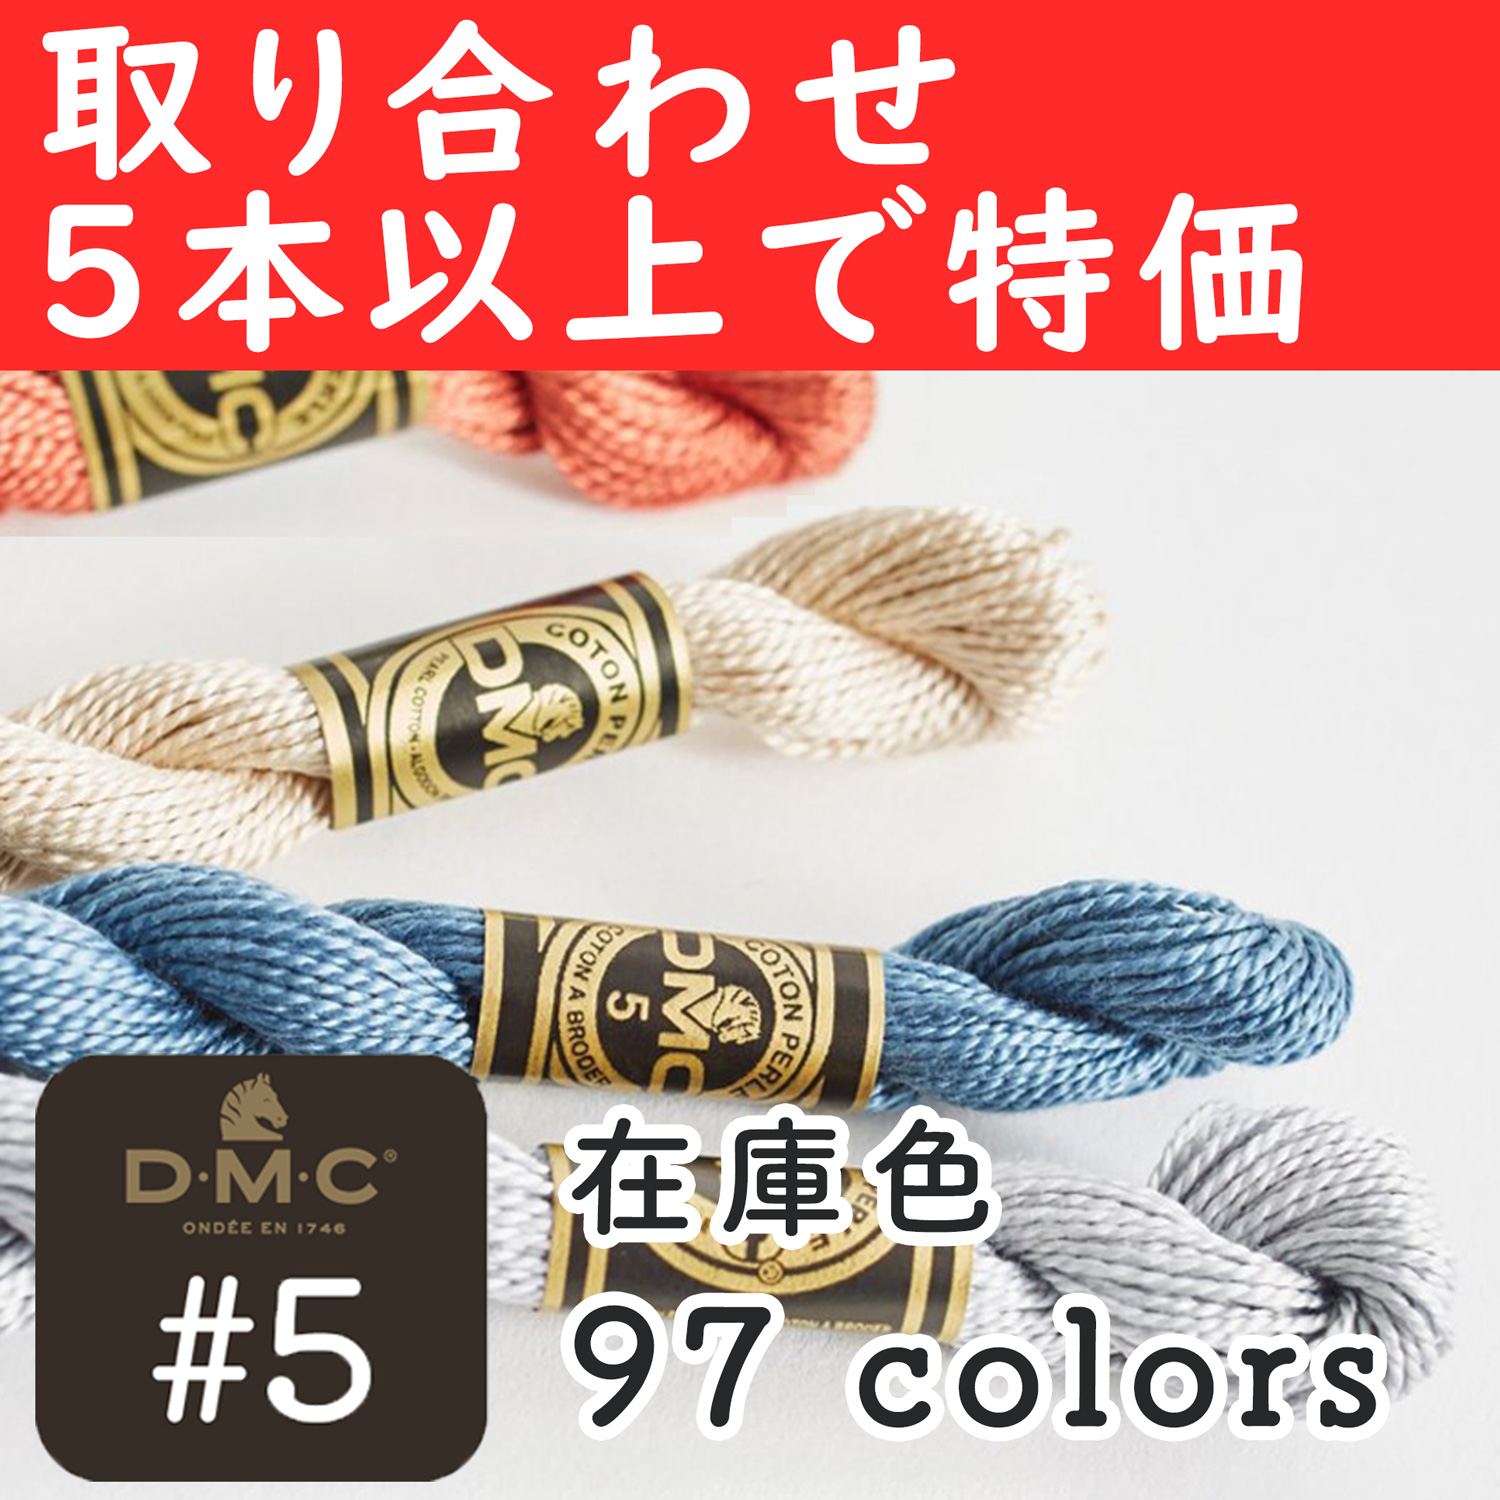 DMC5-OVER5 DMC刺しゅう糸 #5 在庫色 取り合わせ5本以上で特価 (本)